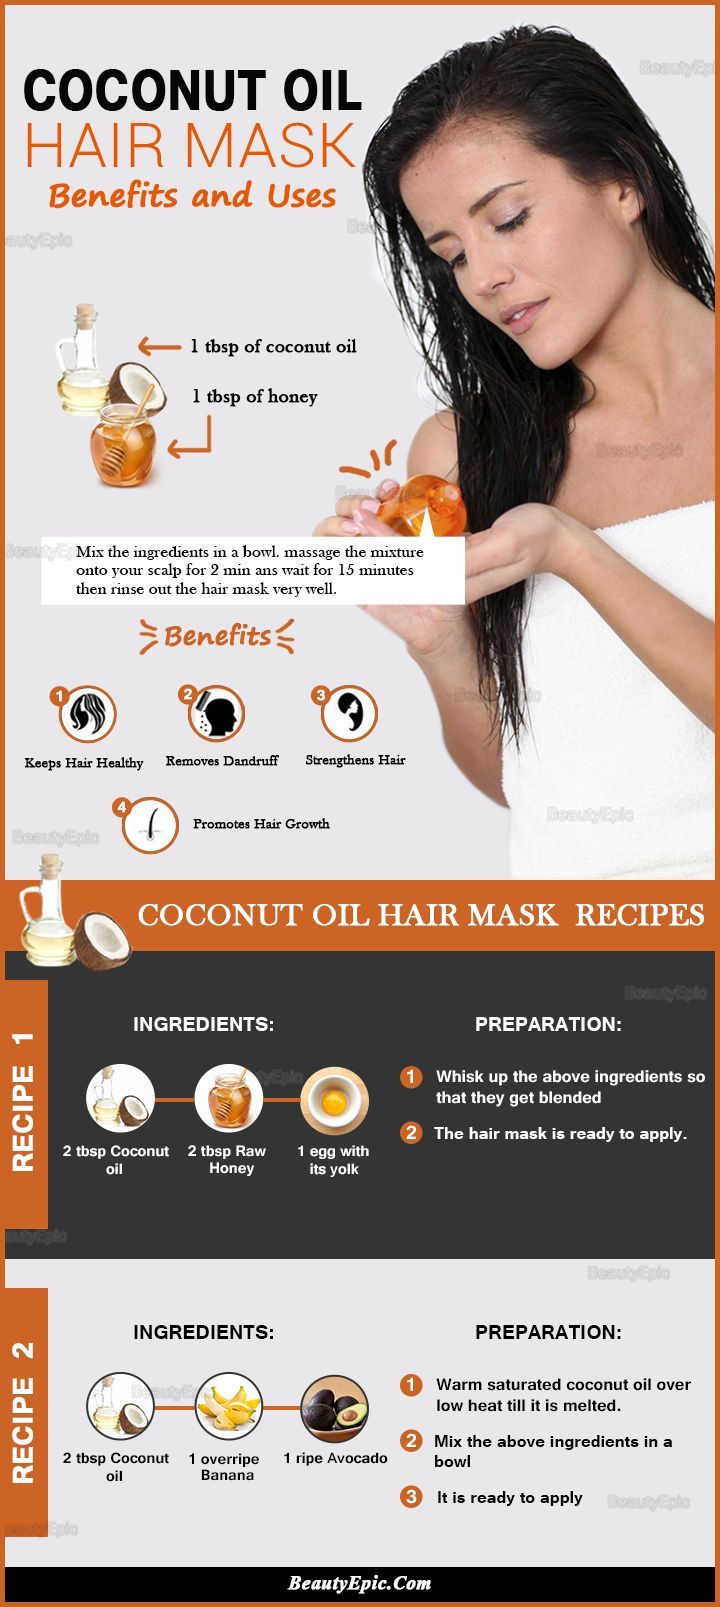 16 makeup Noche coconut oil ideas